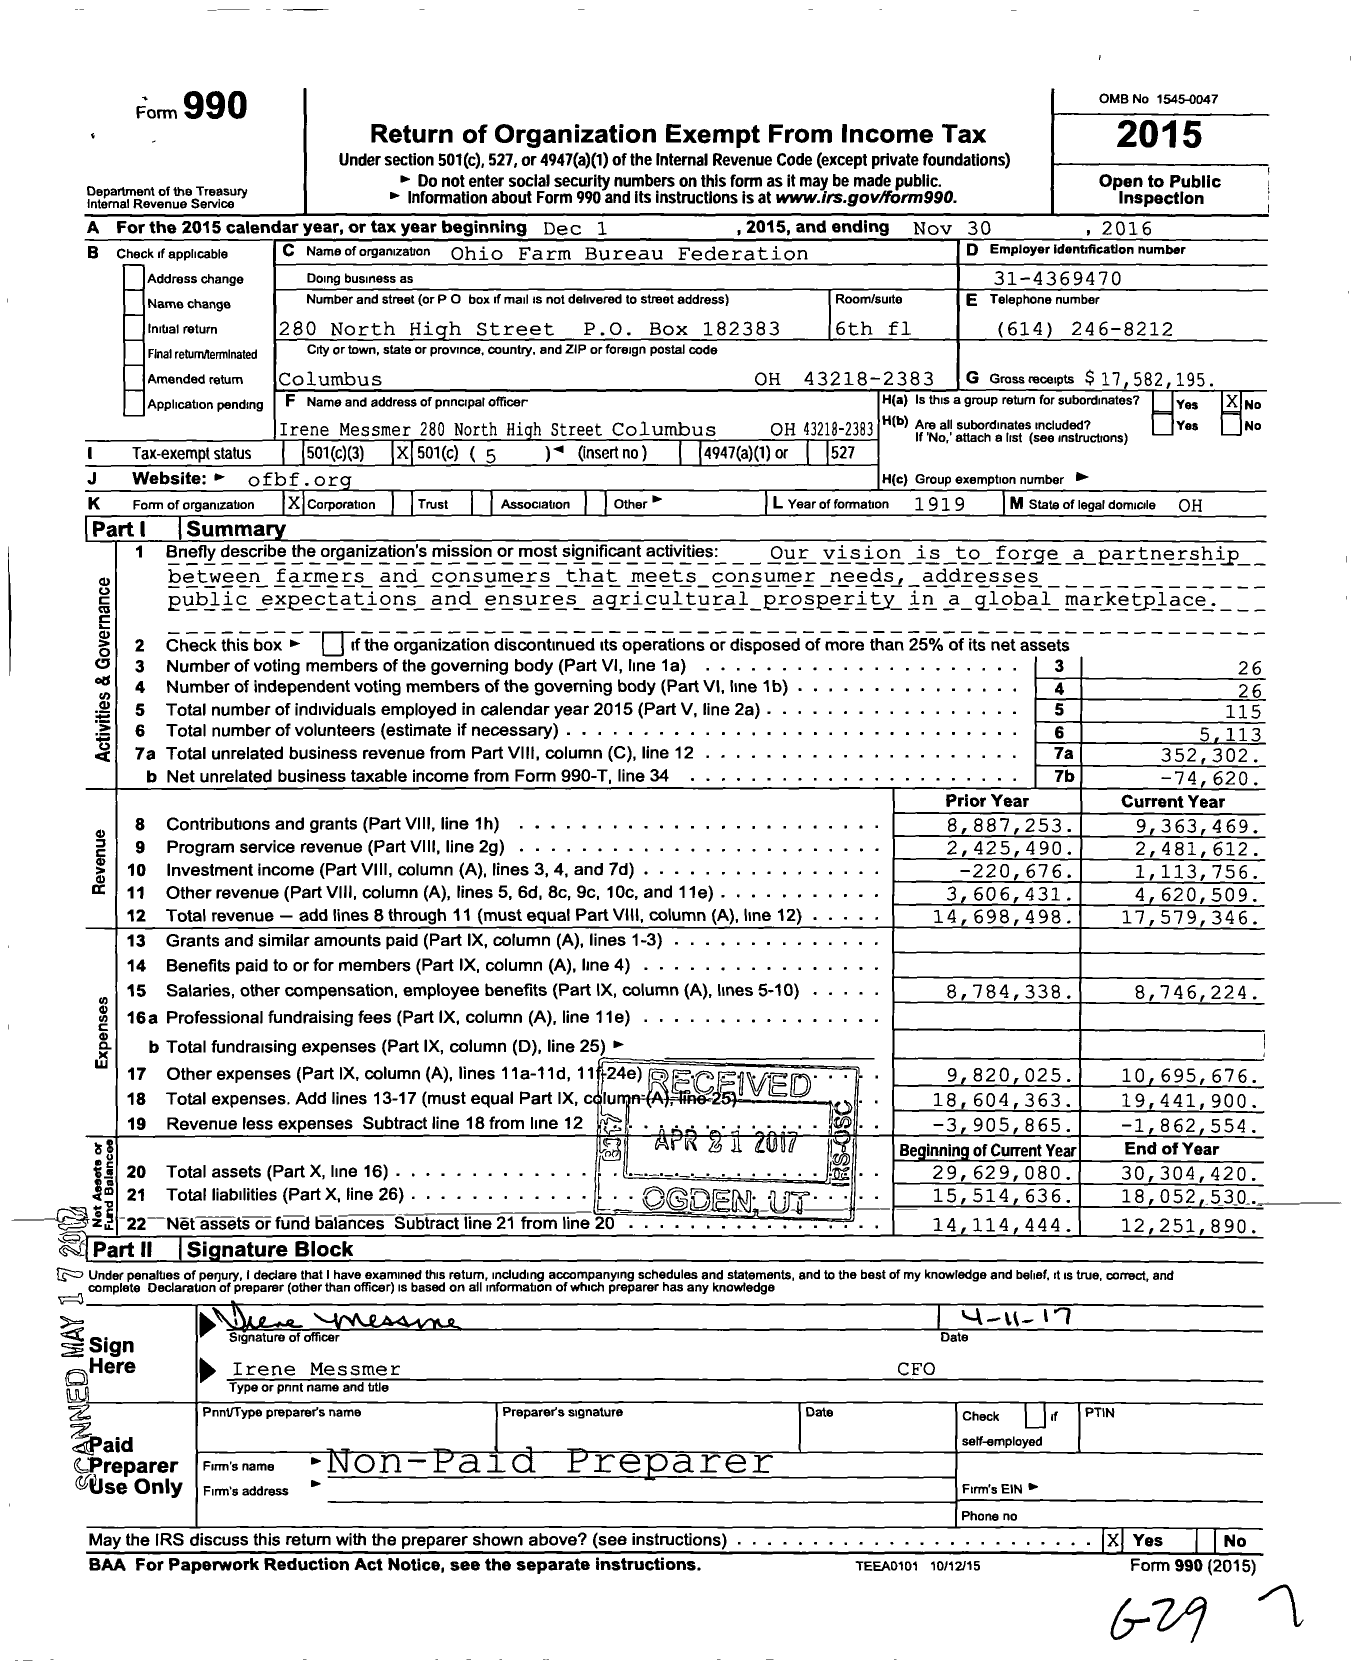 Image of first page of 2015 Form 990O for Ohio Farm Bureau Federation